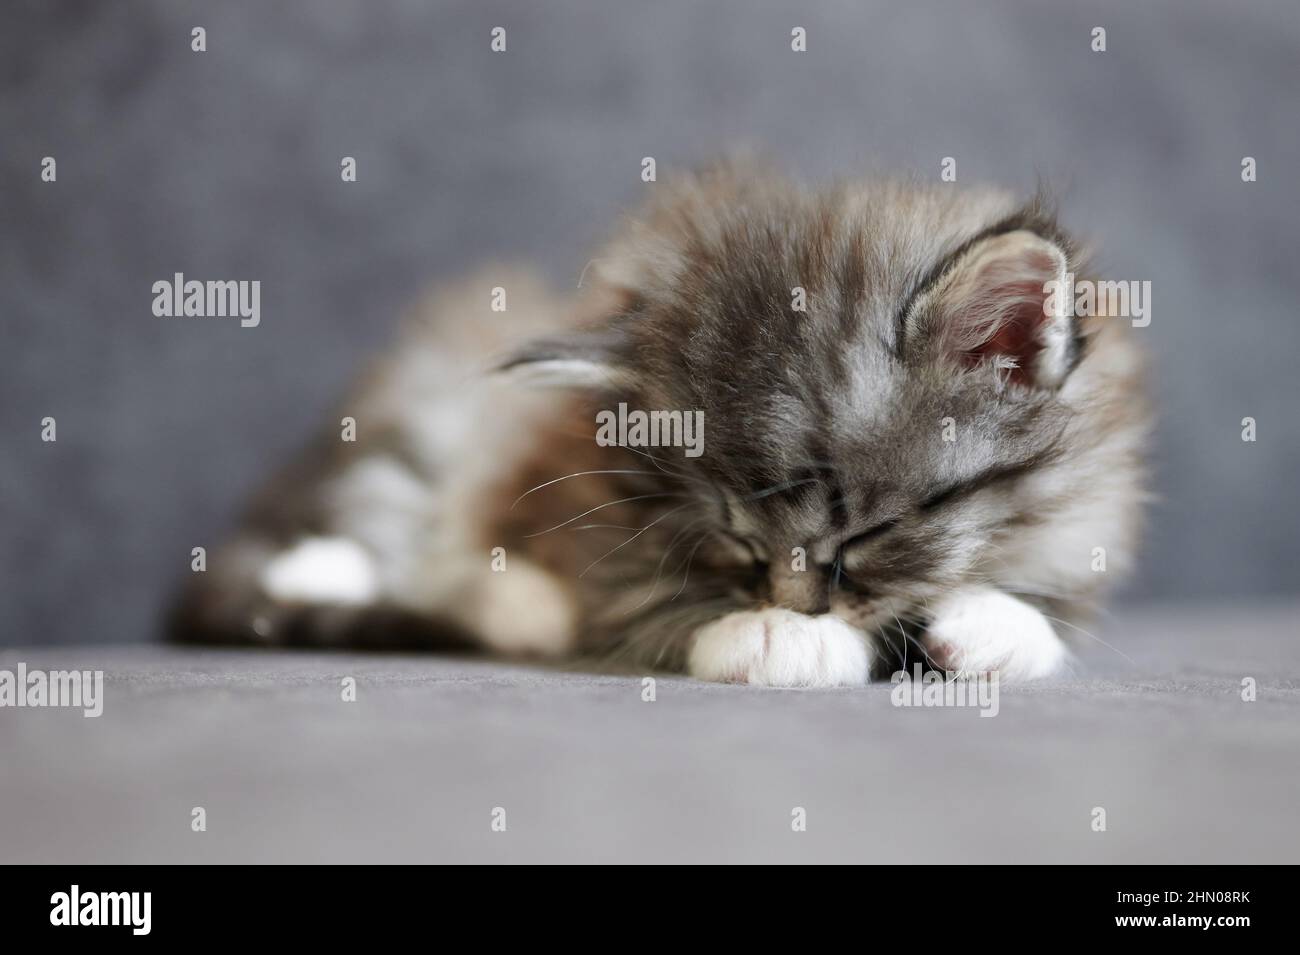 Fluffy gray kitty sleep on soft sofa surface close up view Stock Photo